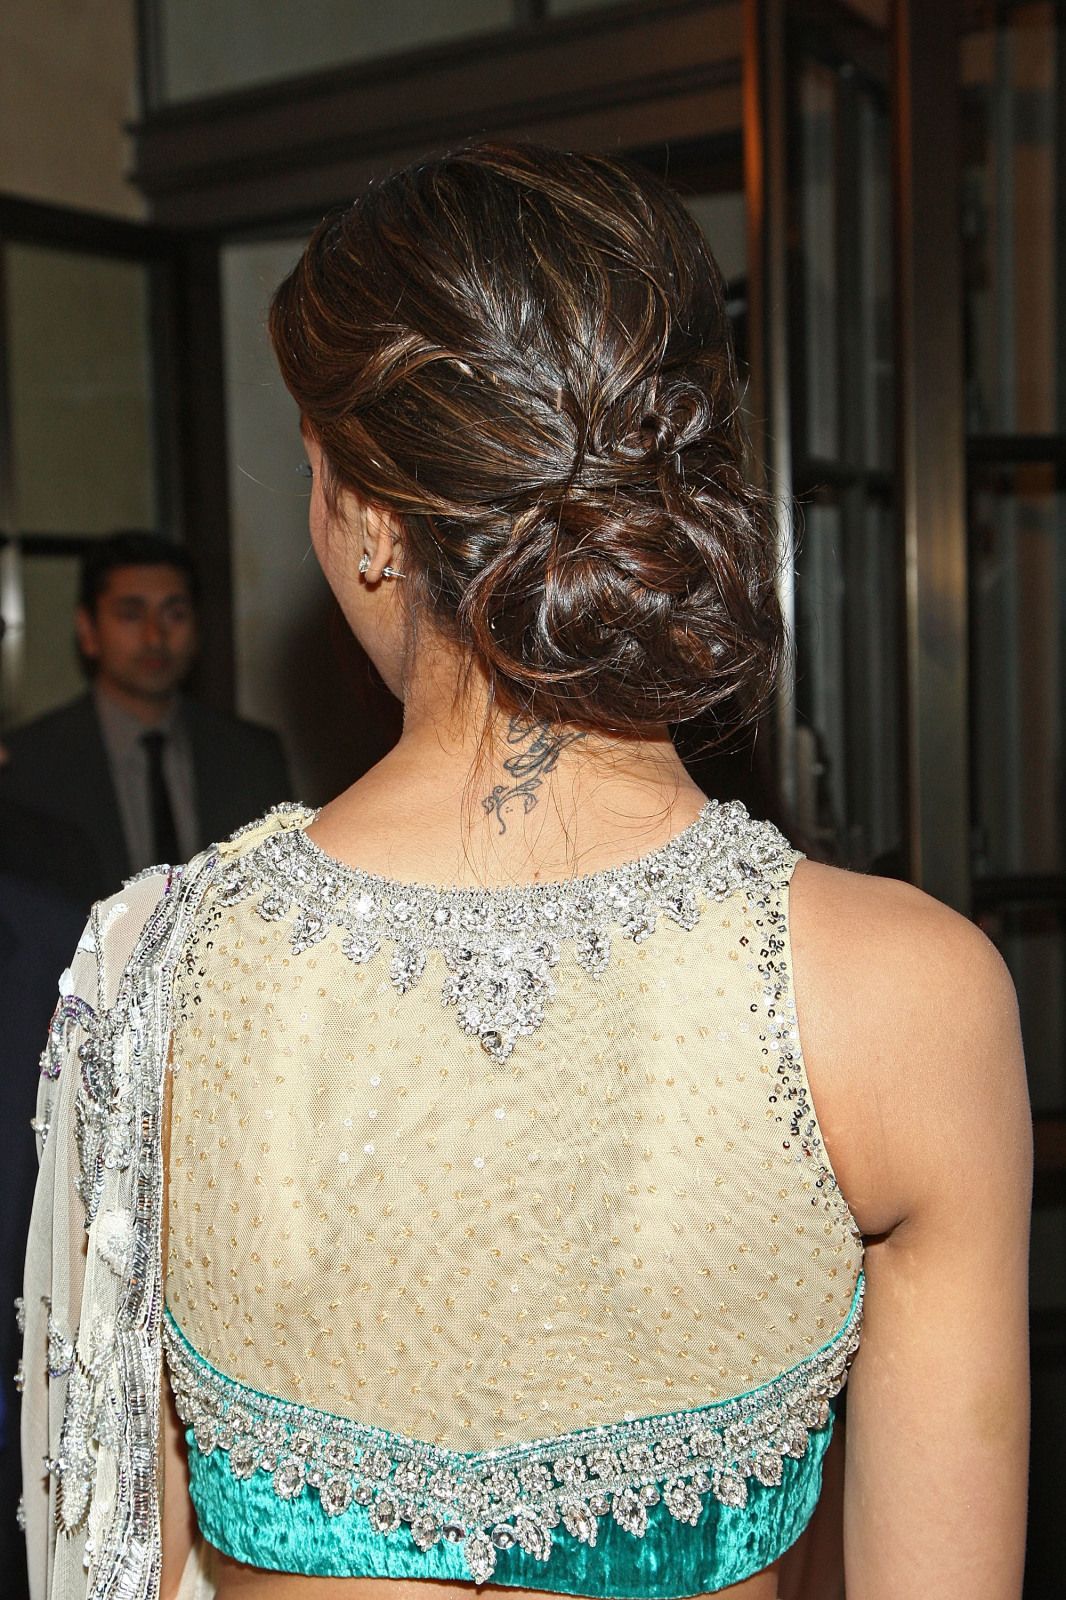 Deepika Padukone with the infamous RK tattoo |photo: getty